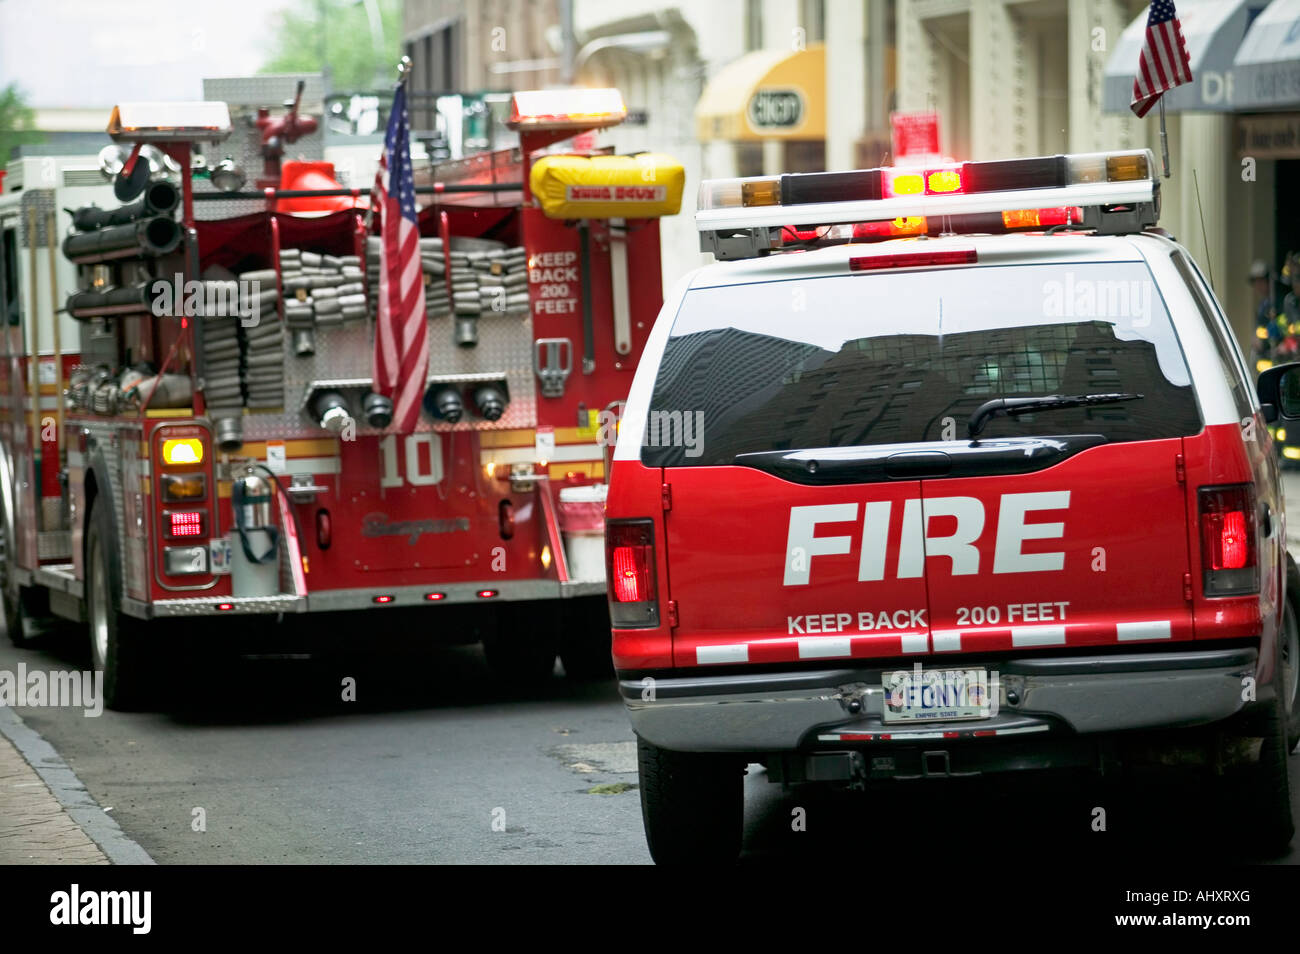 Fire trucks in urban area Stock Photo